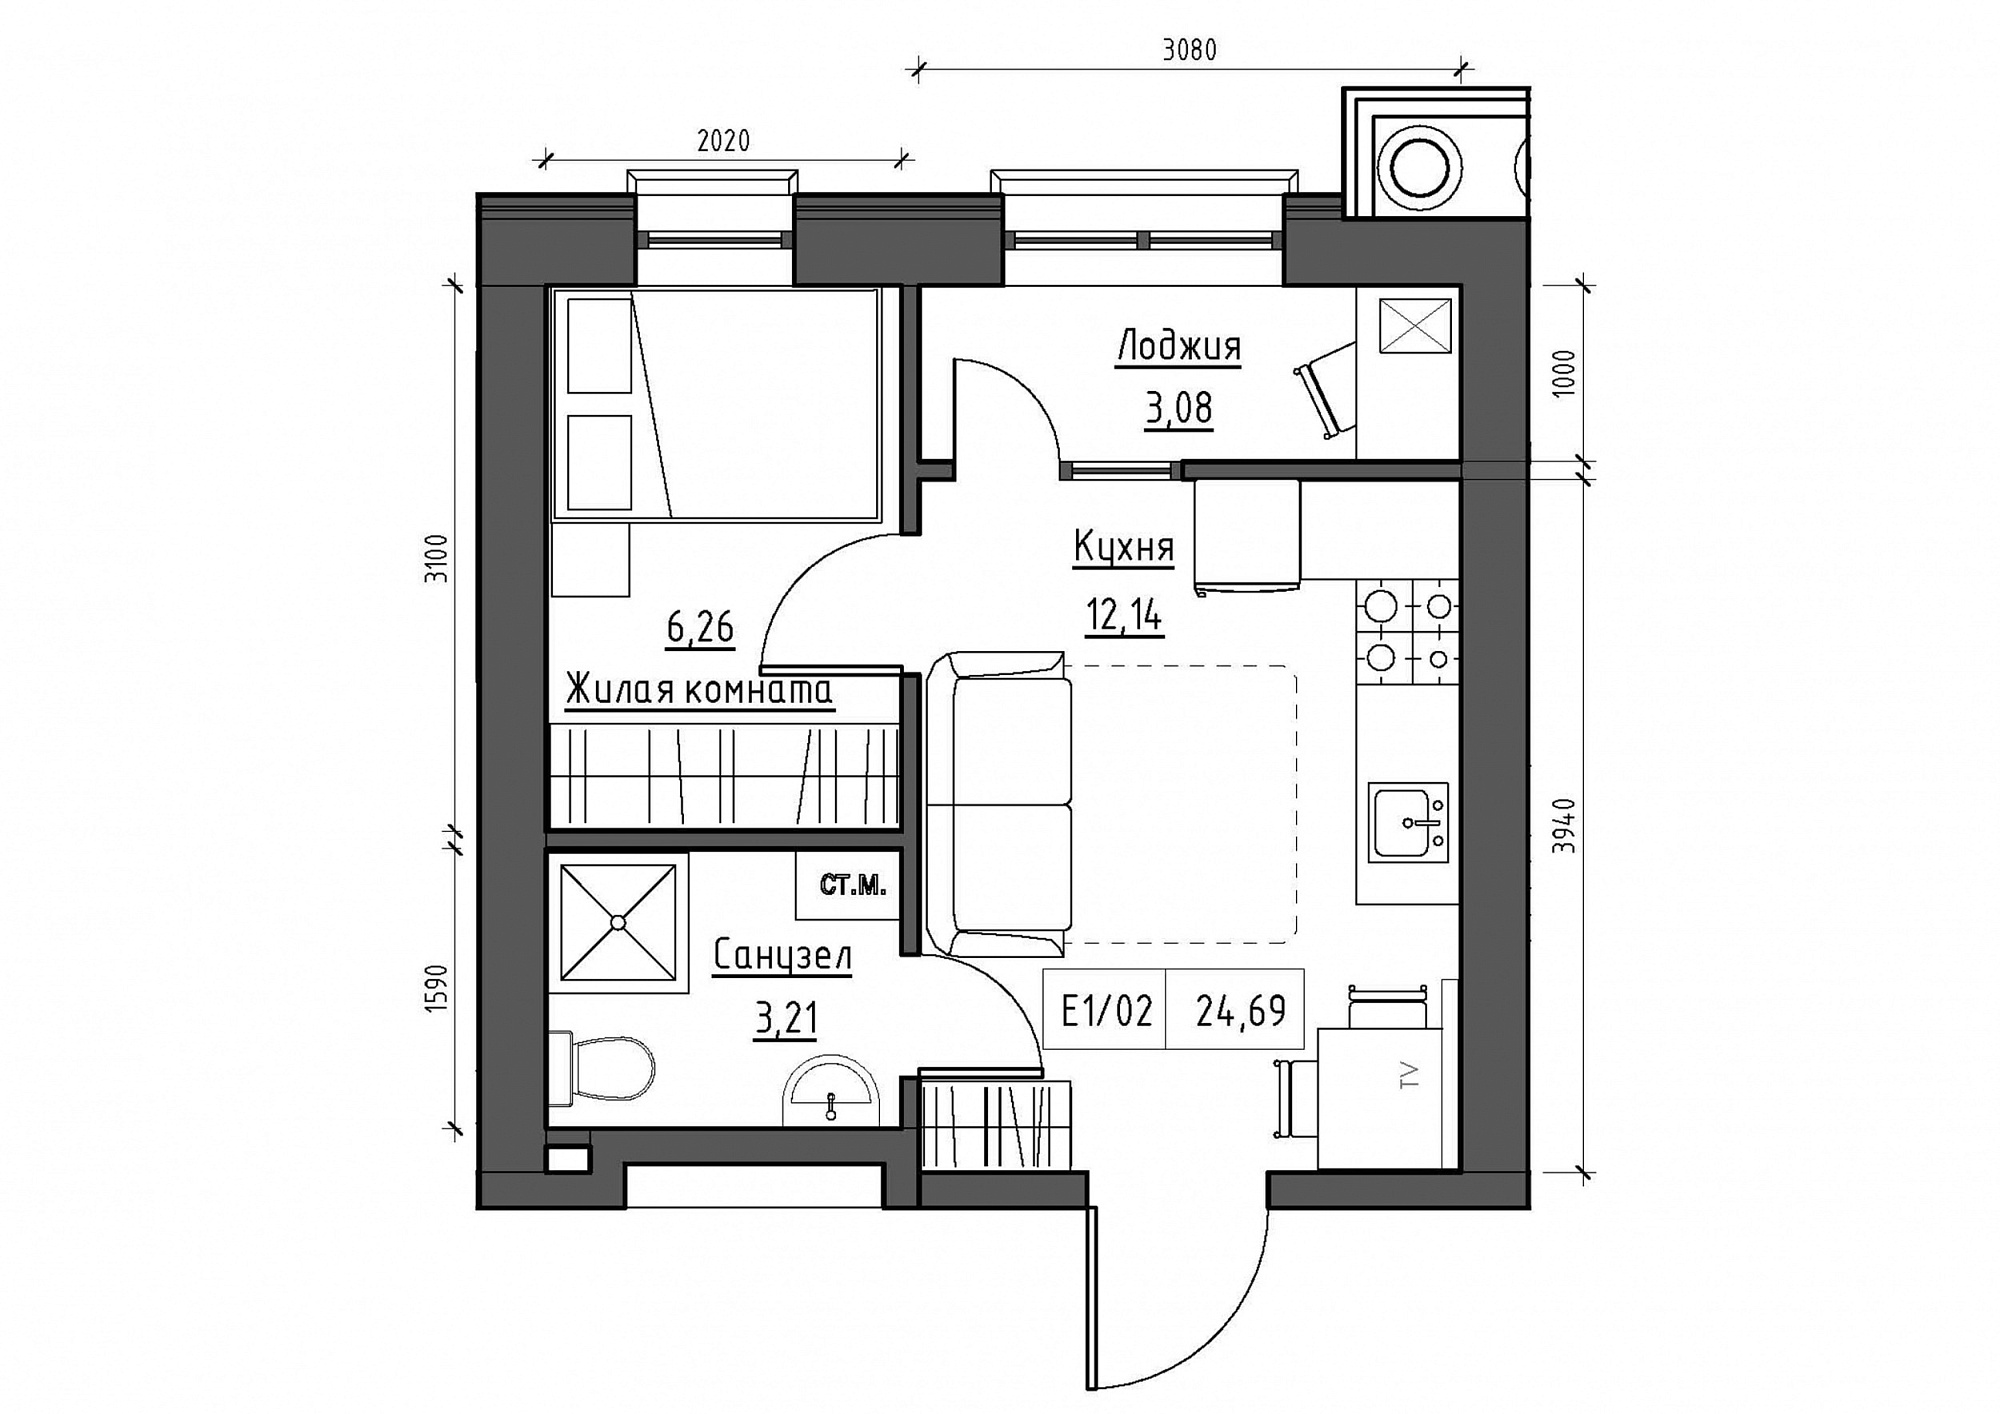 Planning 1-rm flats area 24.69m2, KS-011-01/0014.